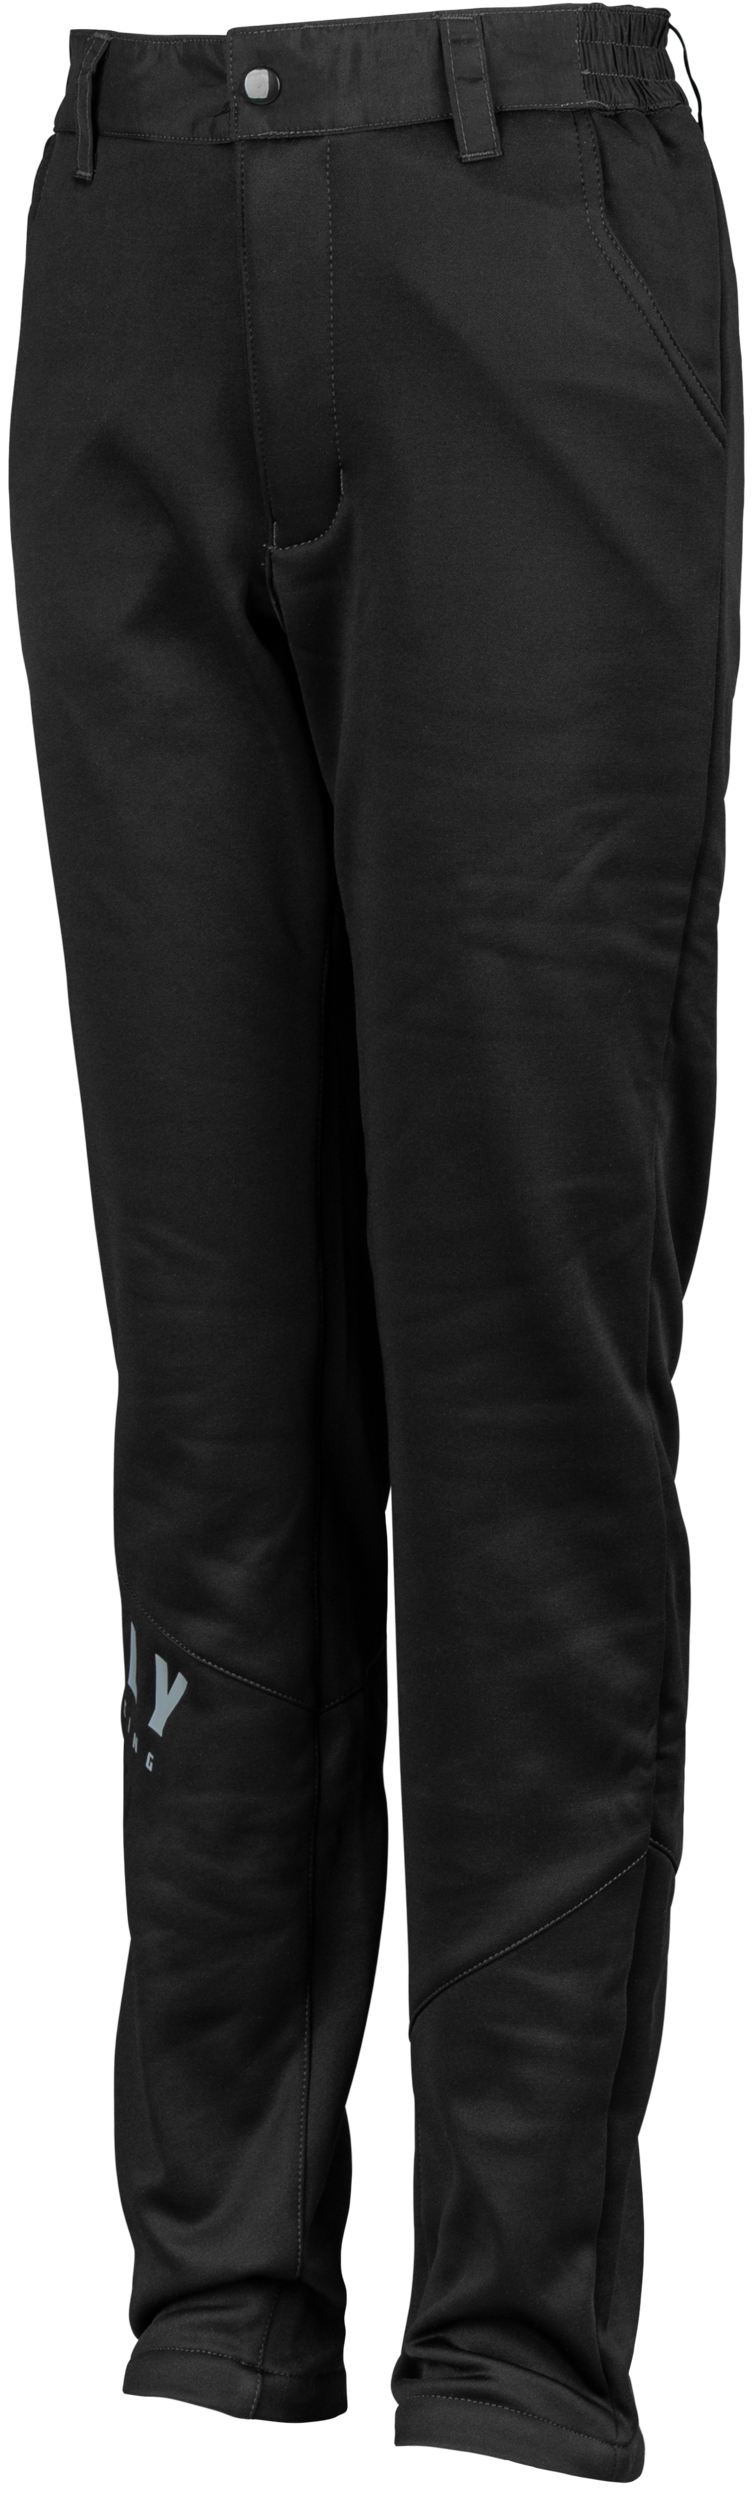 FLY RACING Women's Mid-Layer Pants Black Xs 354-6347XS